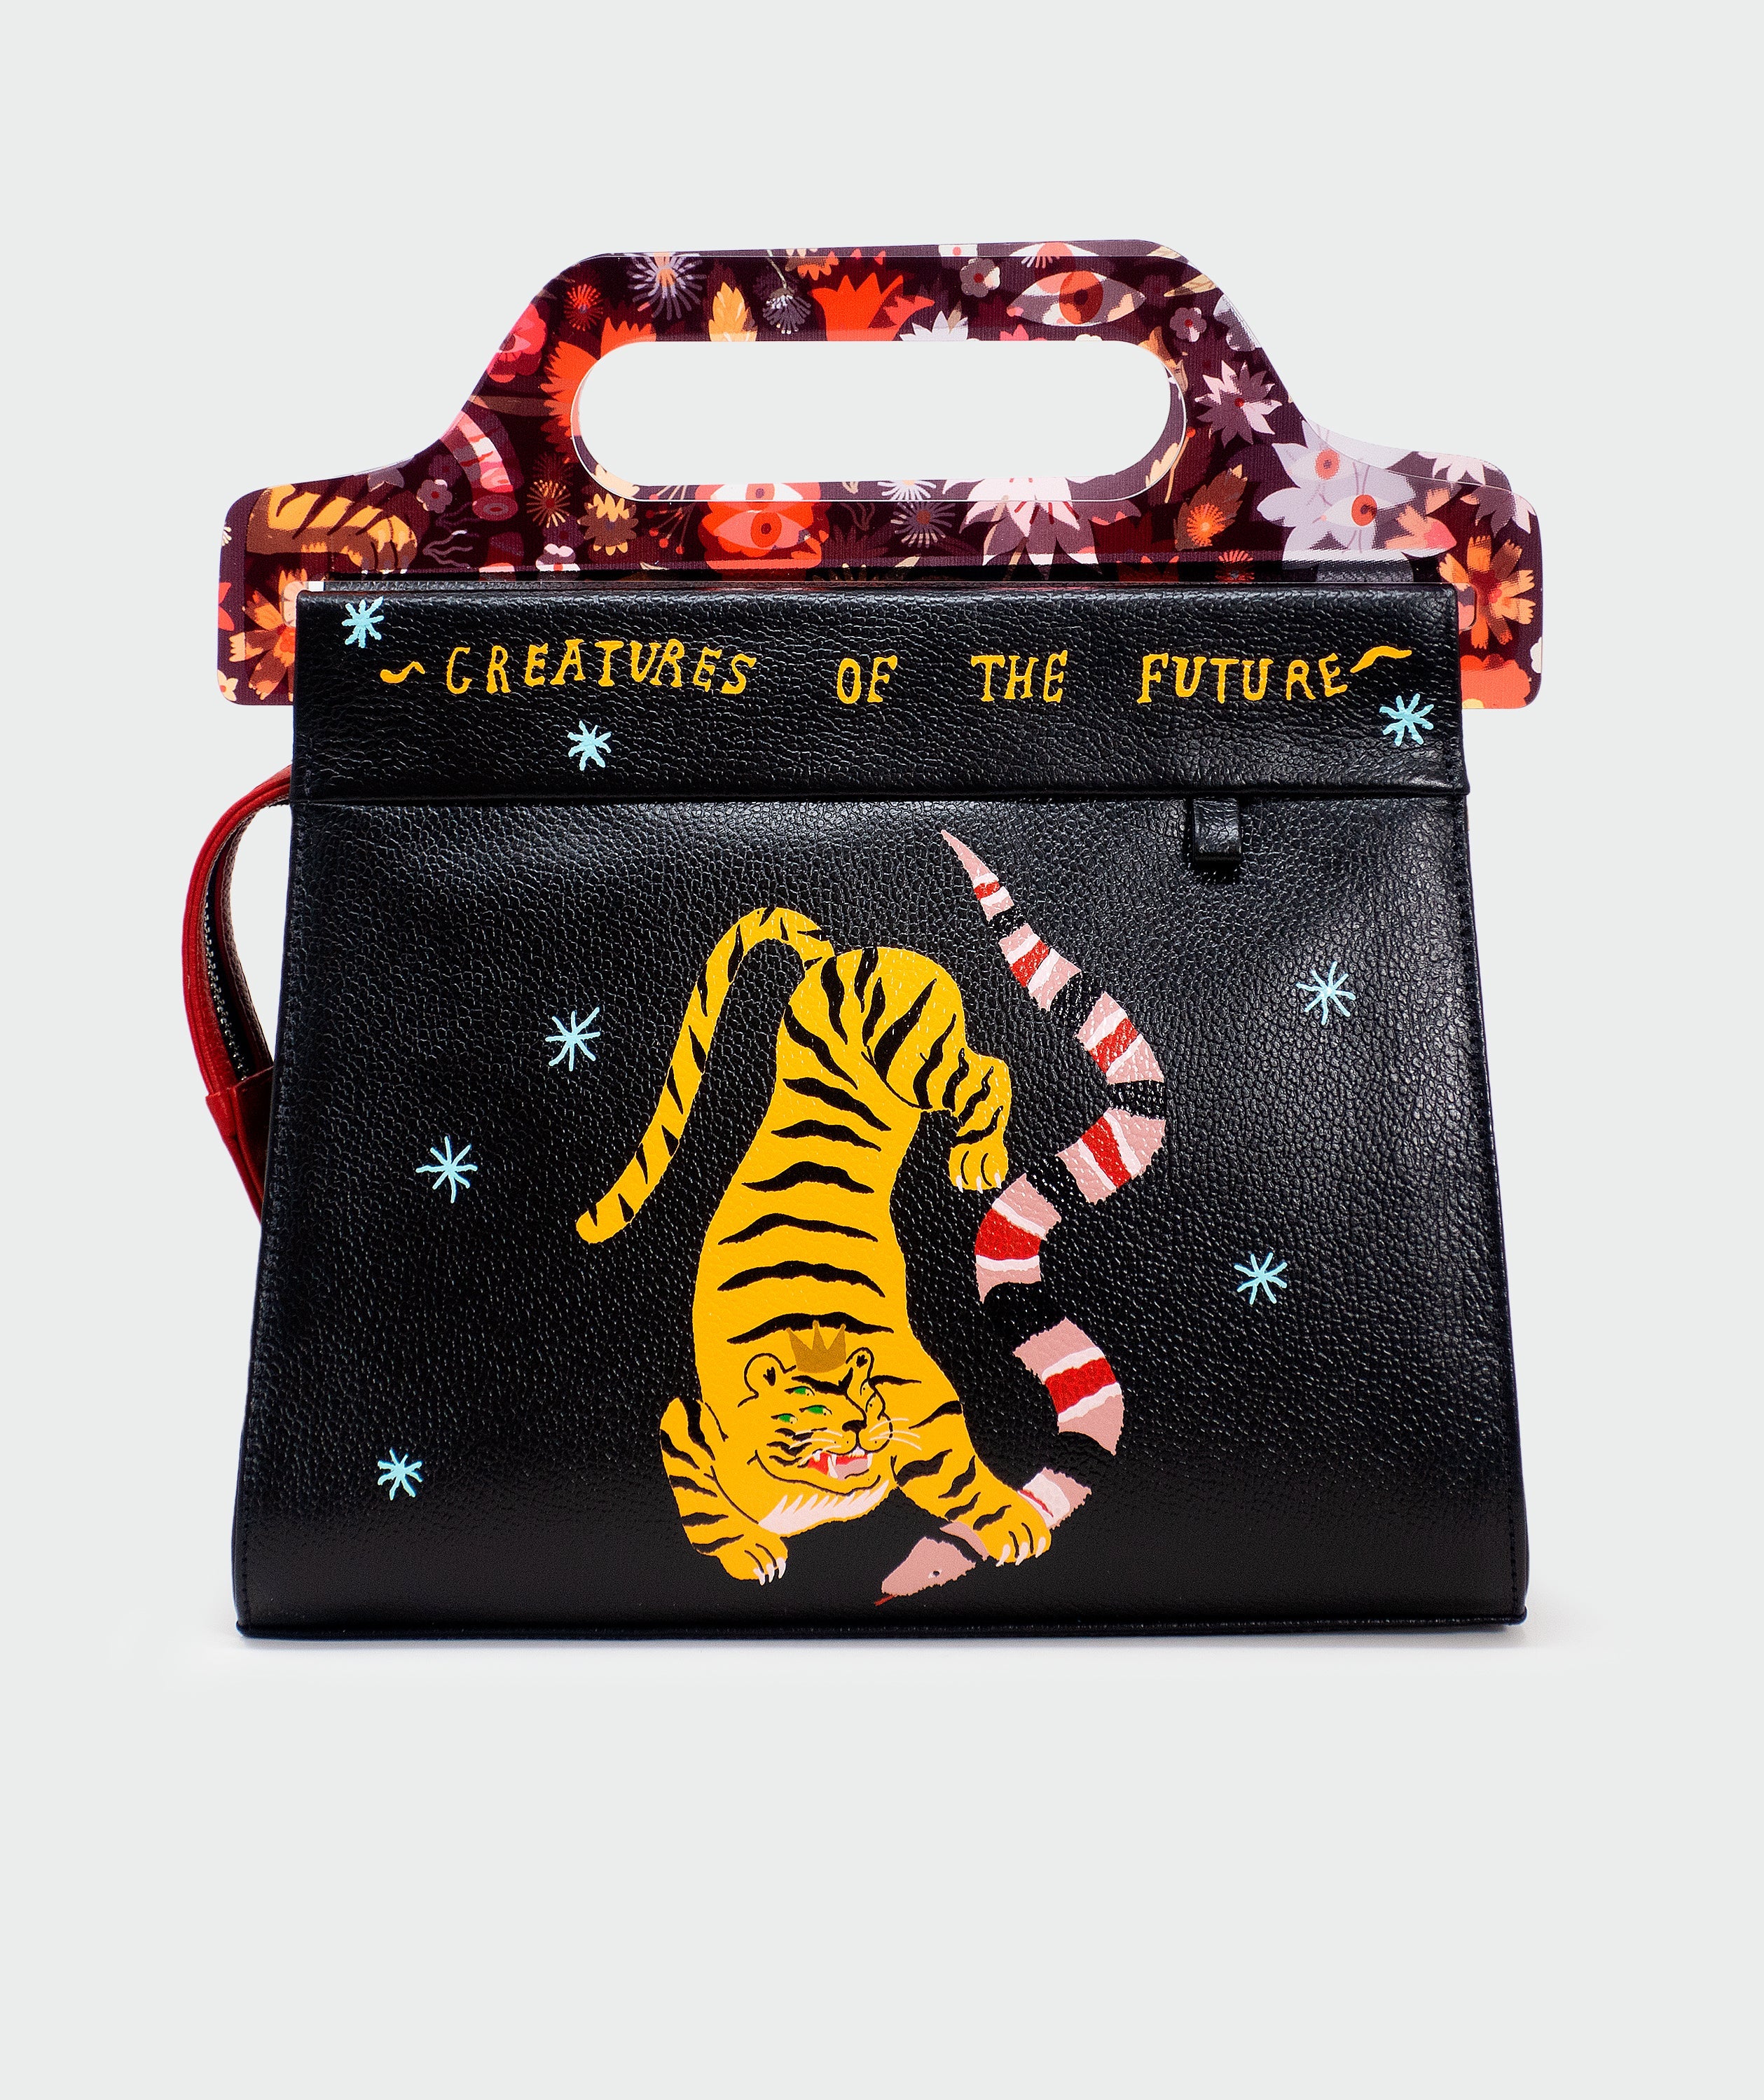 Vali Black Leather Crossbody Handbag Plastic Handle - Tiger And Snake Print -  Front view